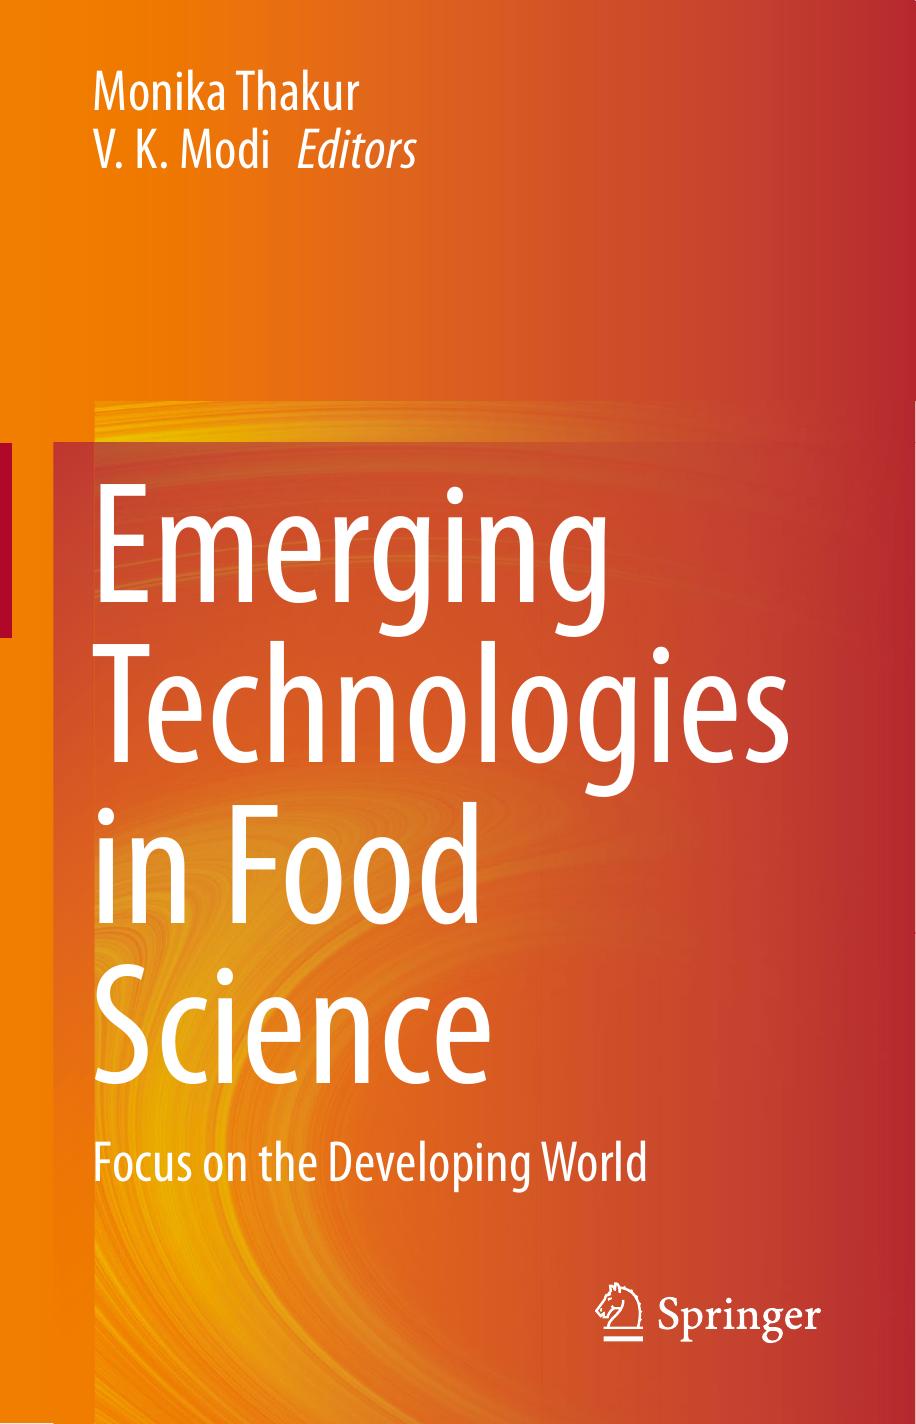 Emerging Technologies in Food Science 2020